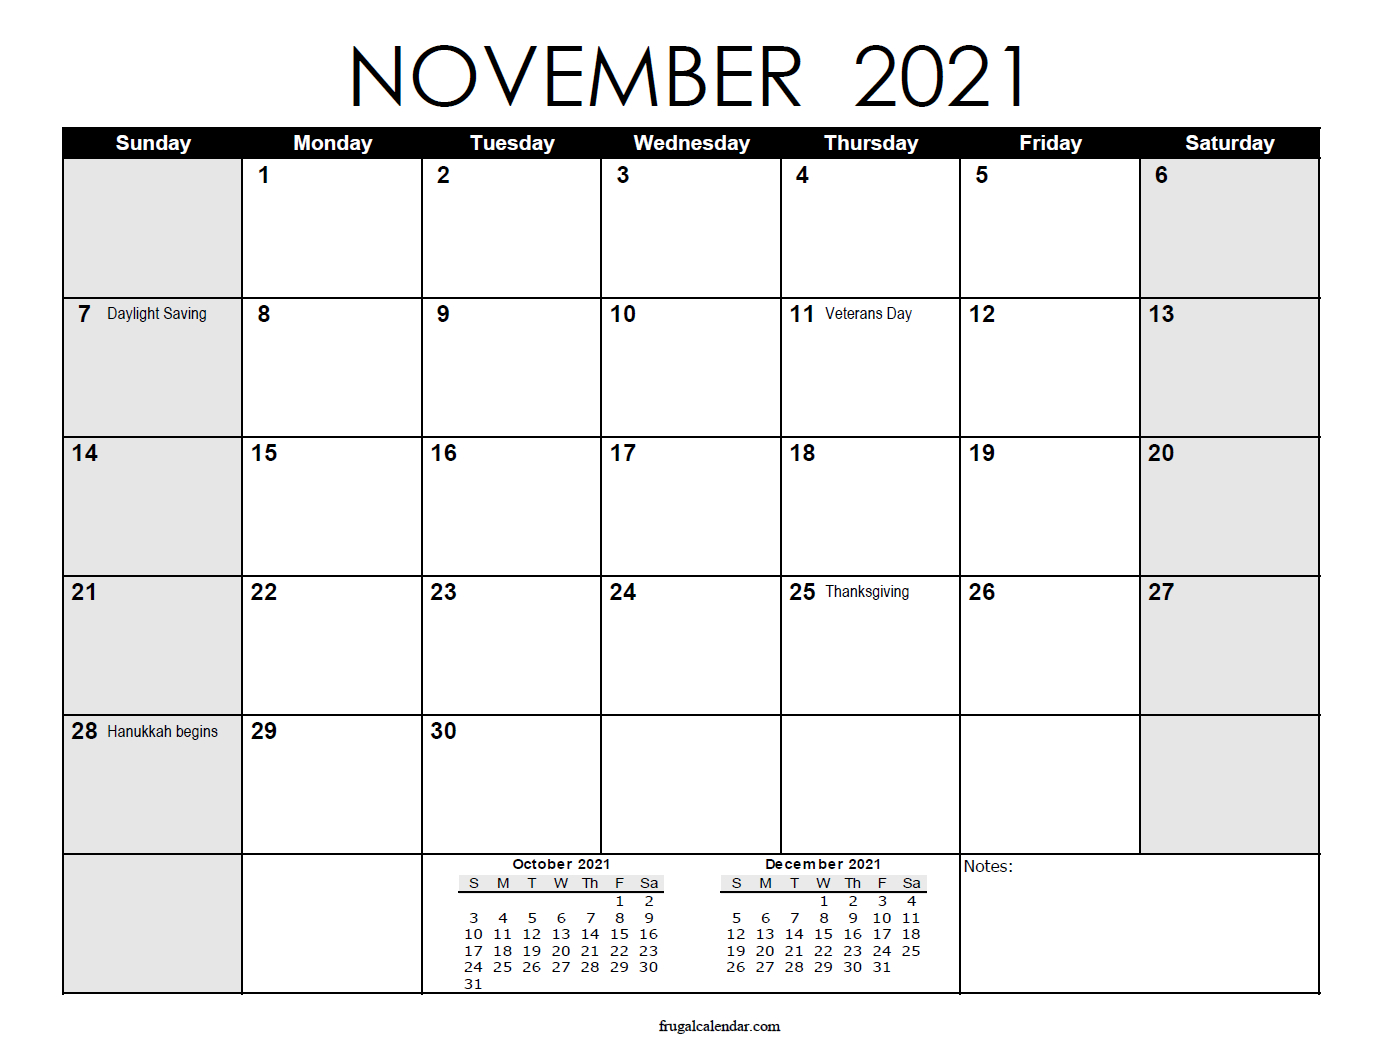 November Calendar 2021 | 2021 Calendars Printable Www.a-Printable-Calendar.com November 2021